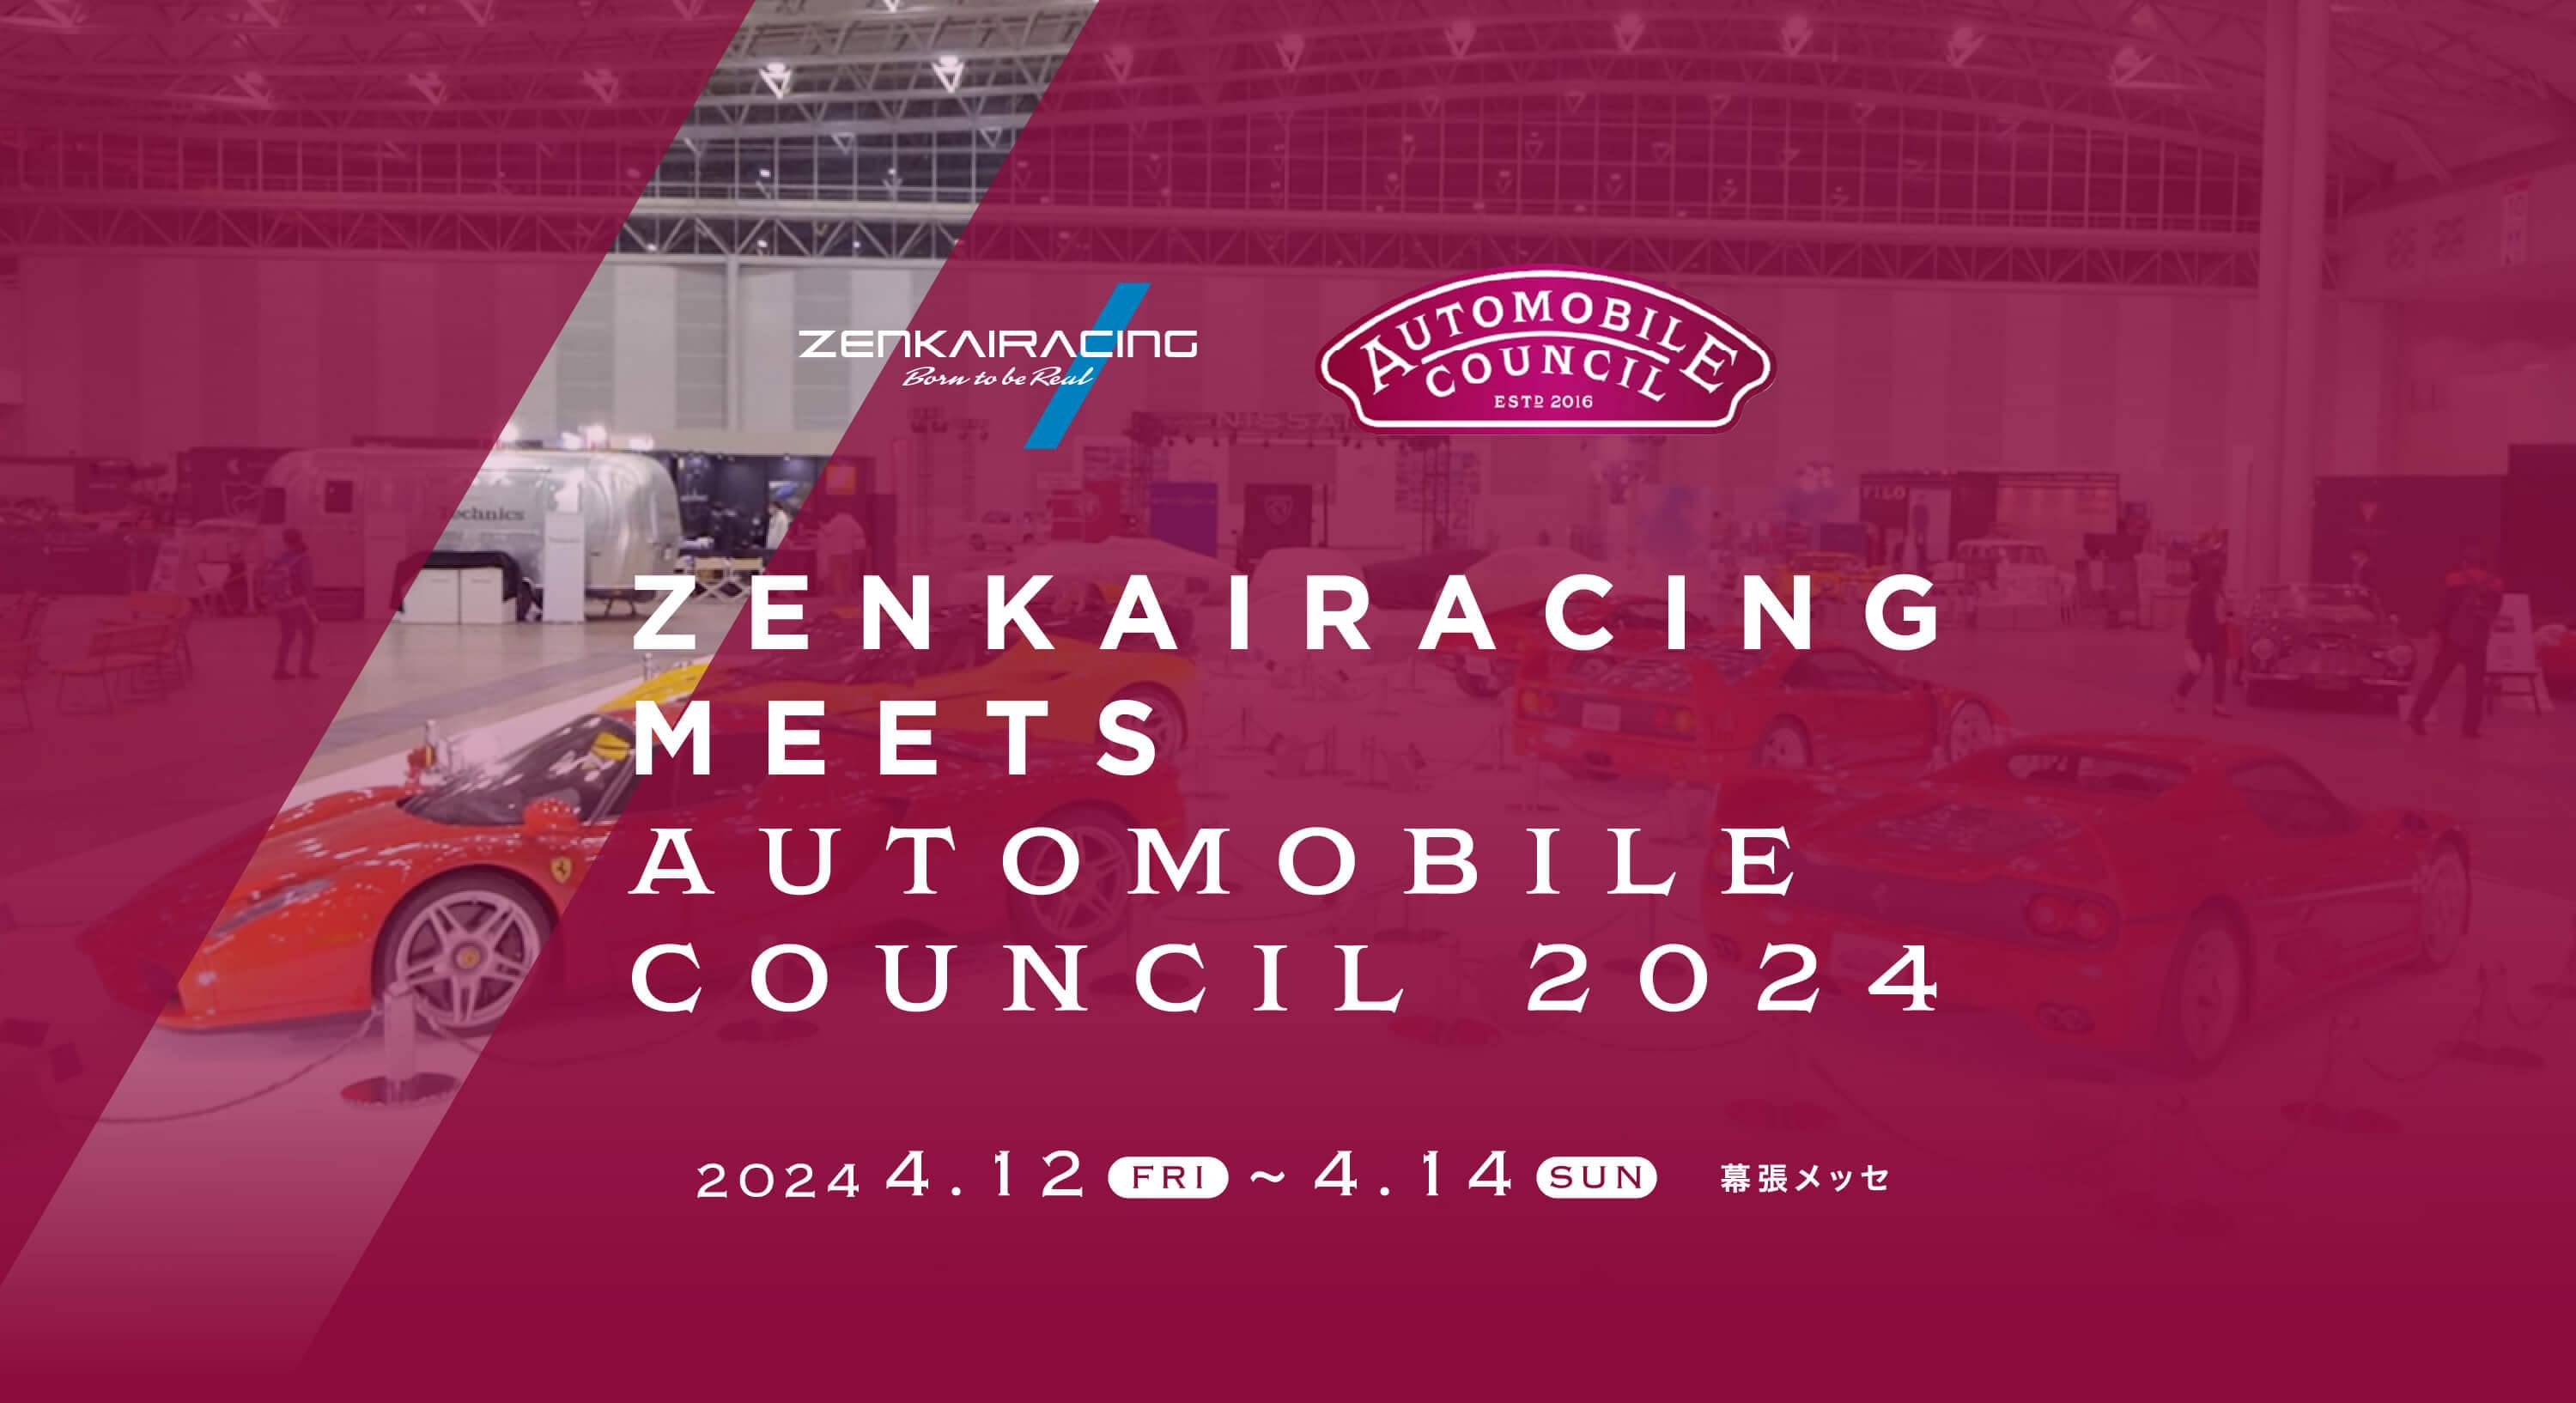 ZENKAIRACING MEETS AUTOMOBILE COUNCIL 2024. 2024.4.12(FRI)〜4.14(SUN) 幕張メッセ